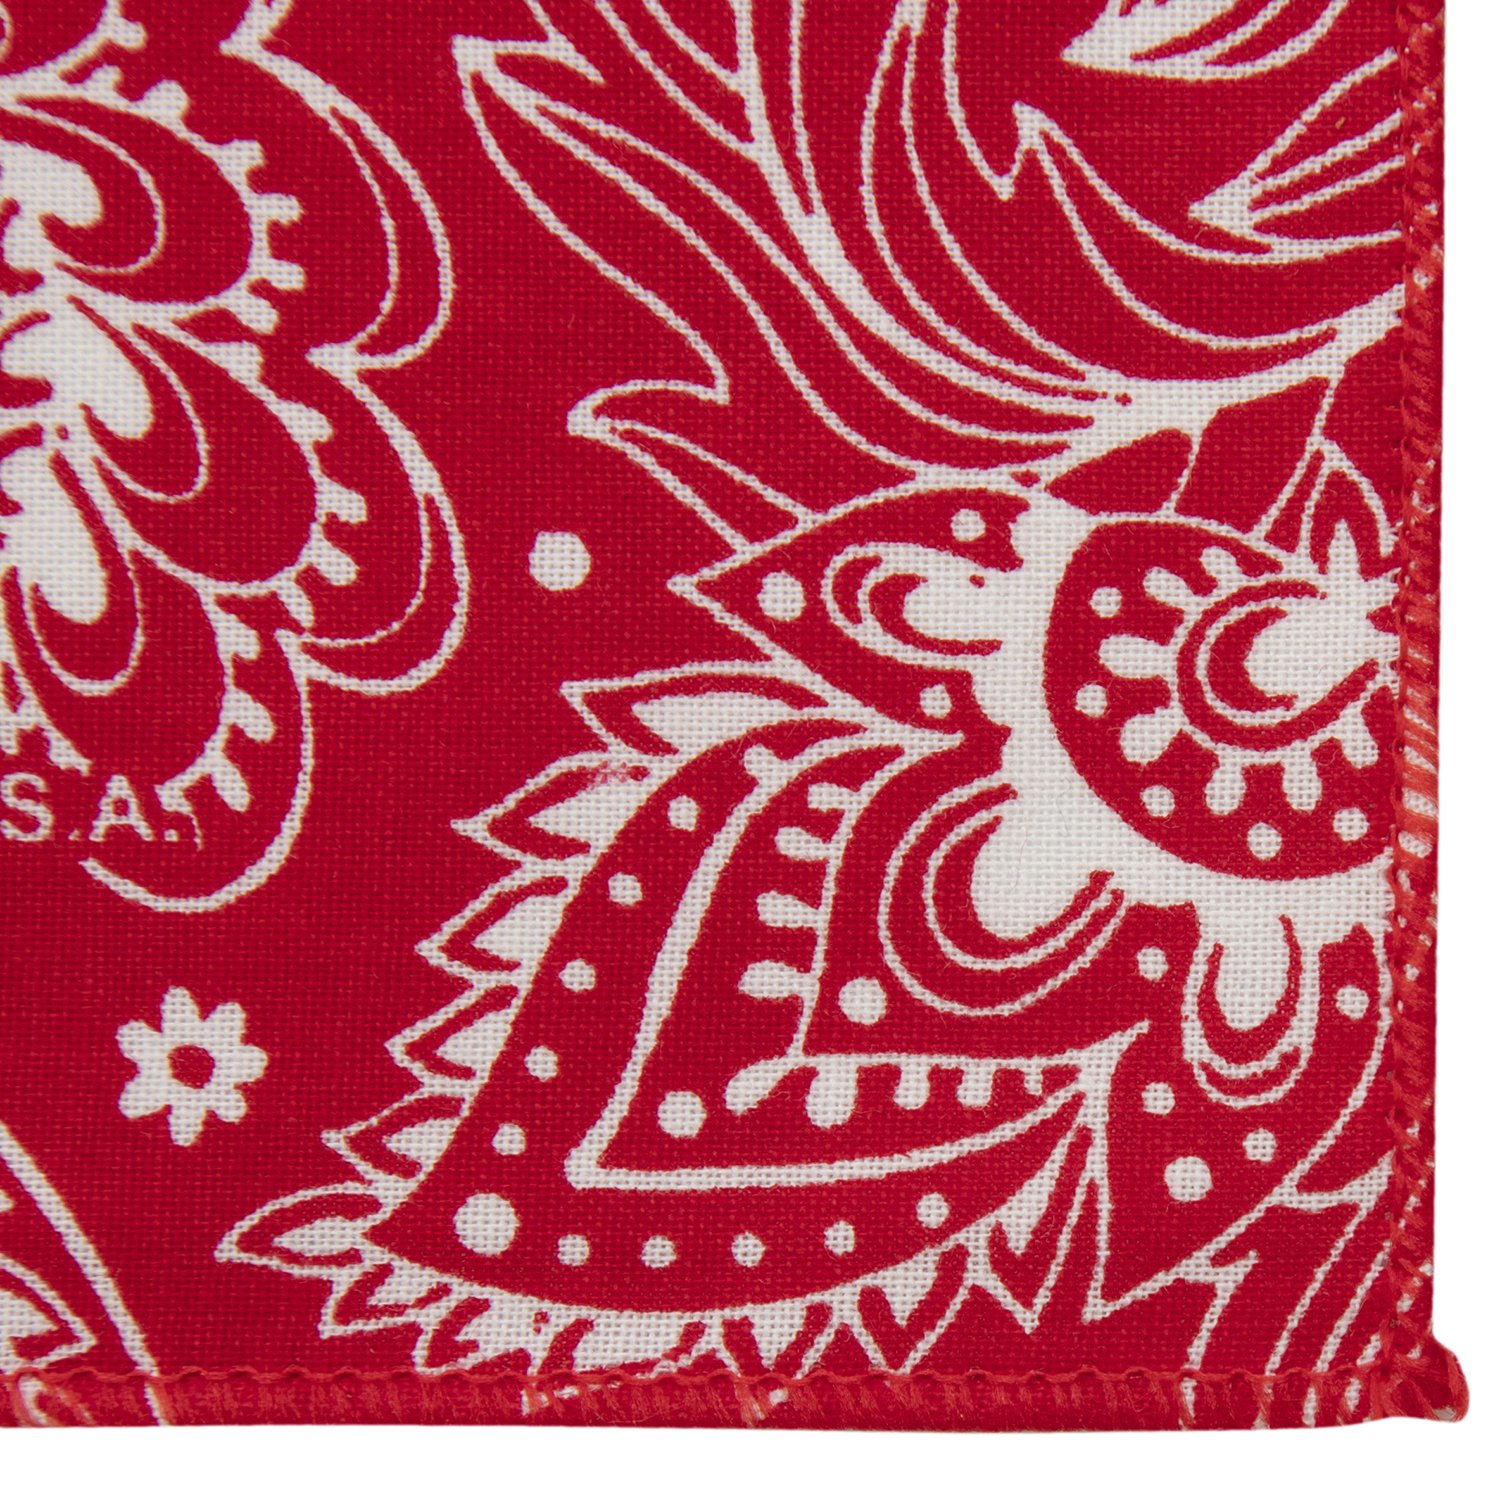 Prims Paisley Flower - Red Bandana - Single Piece - 22x22